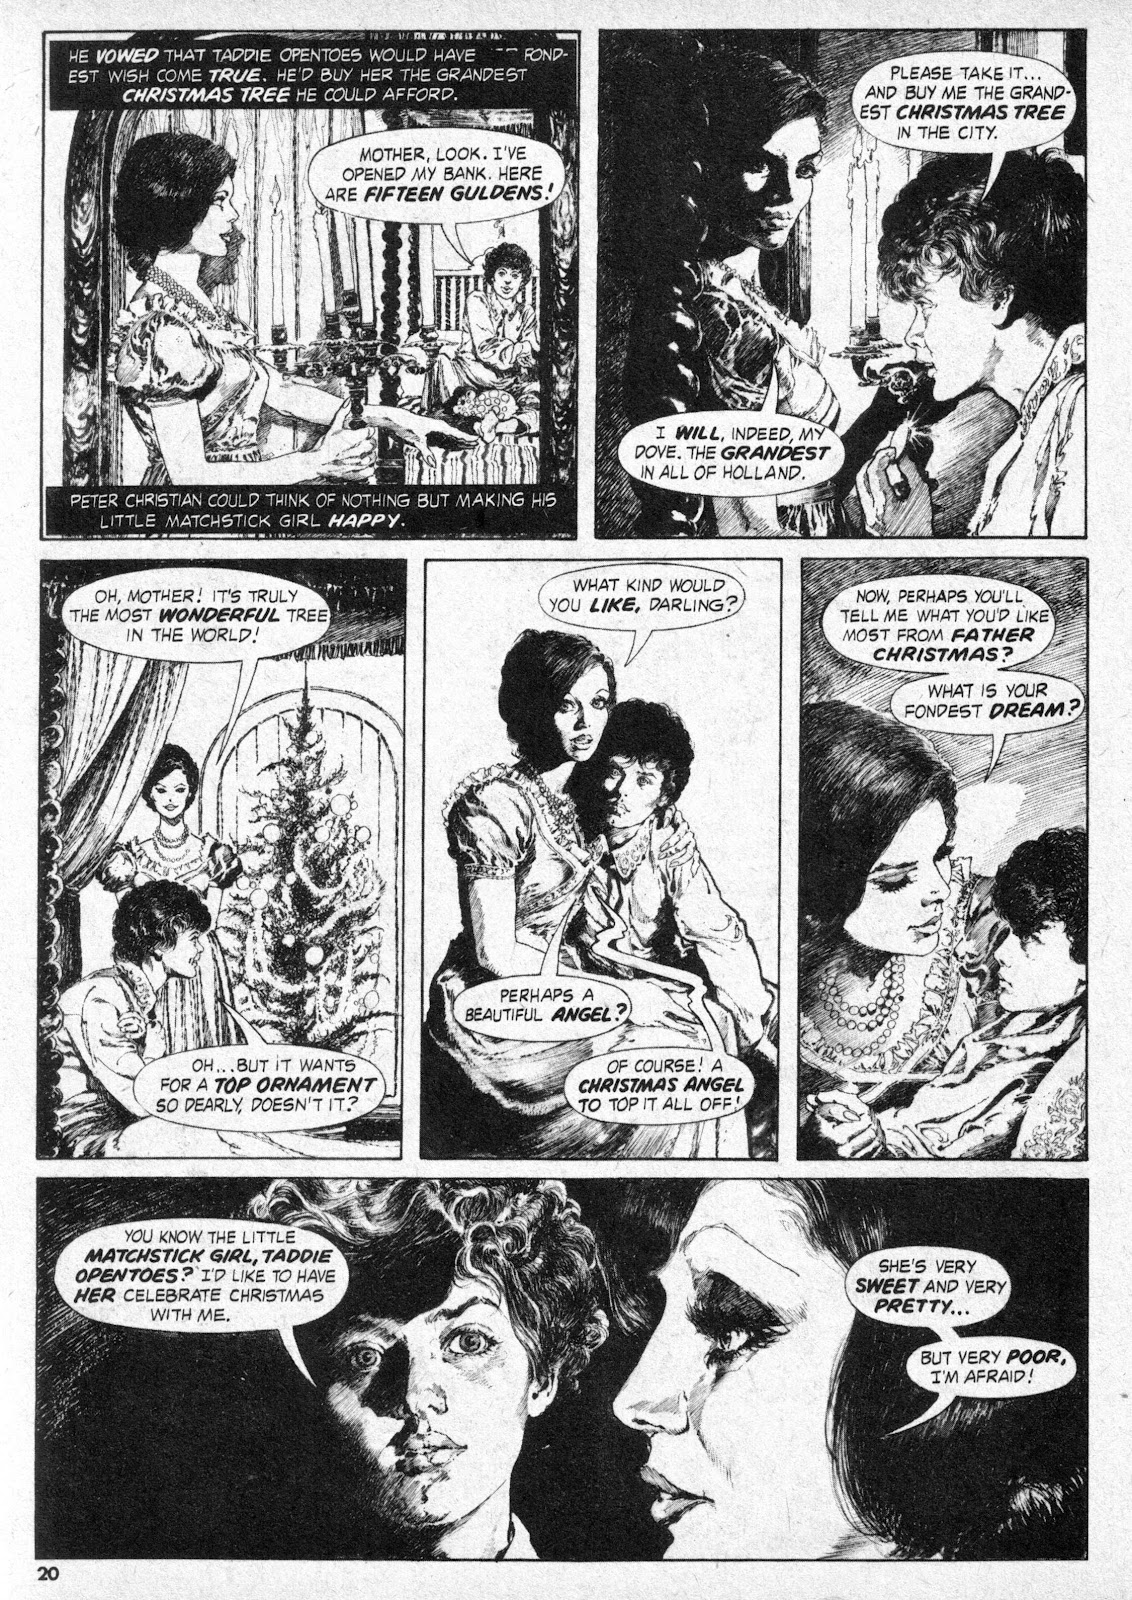 Vampirella (1969 series) #15, VF+ (Actual scan)